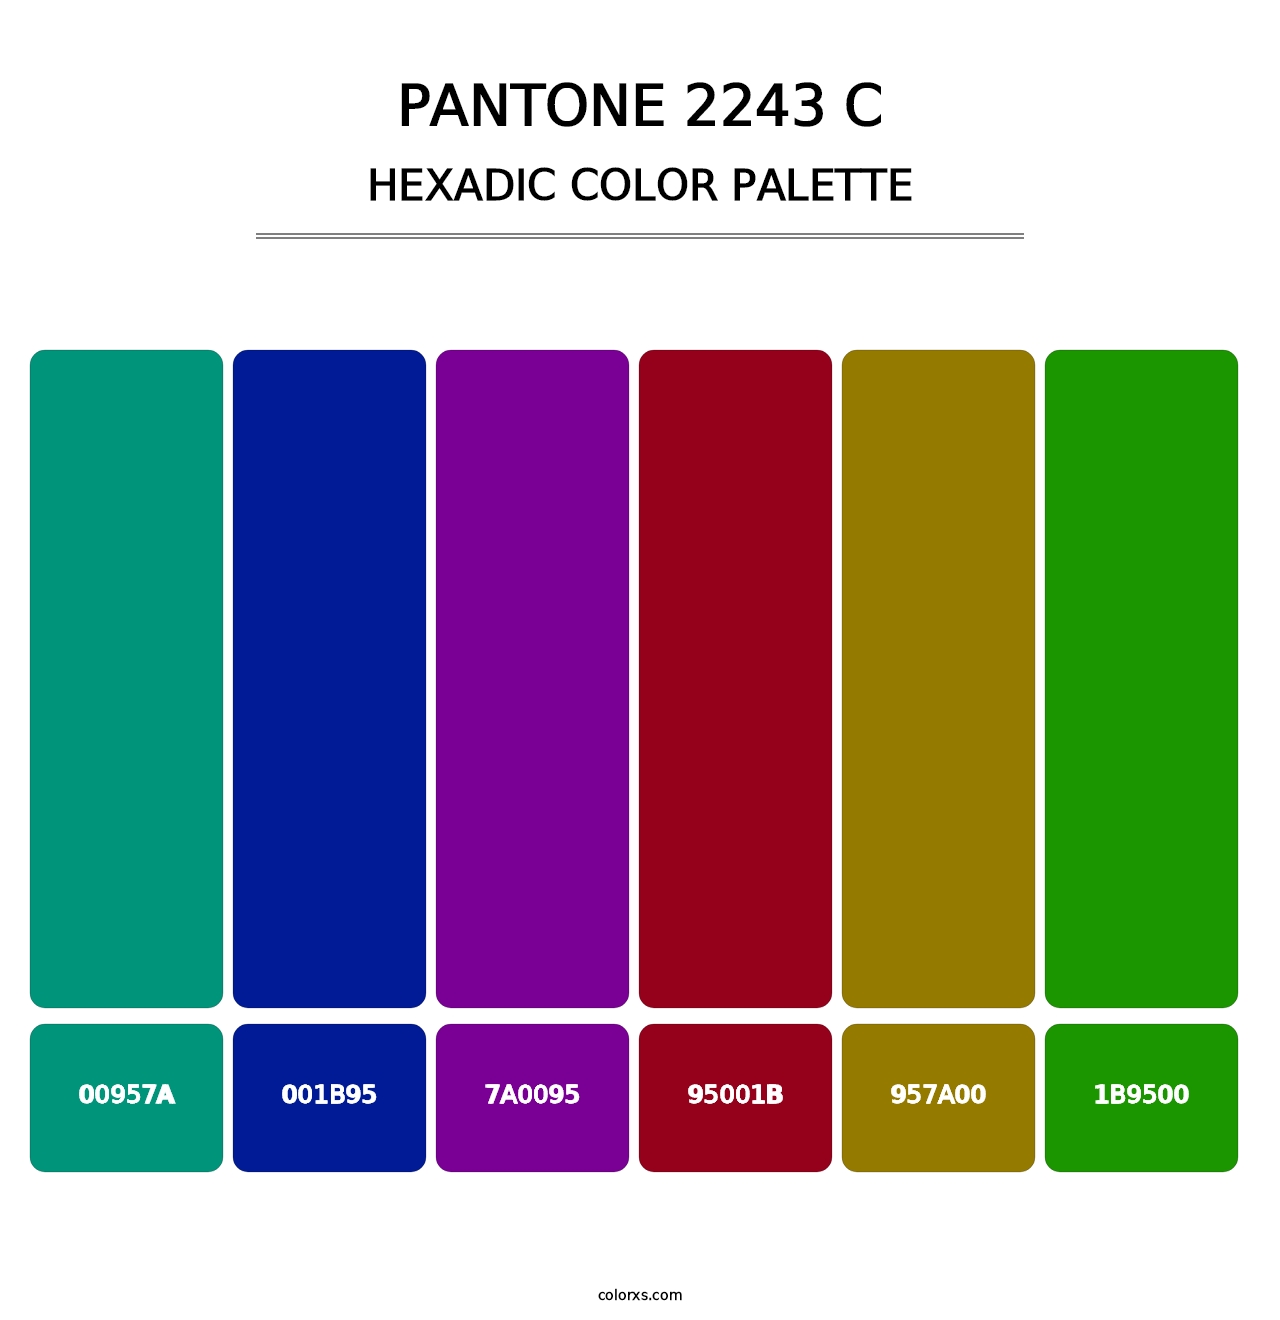 PANTONE 2243 C - Hexadic Color Palette